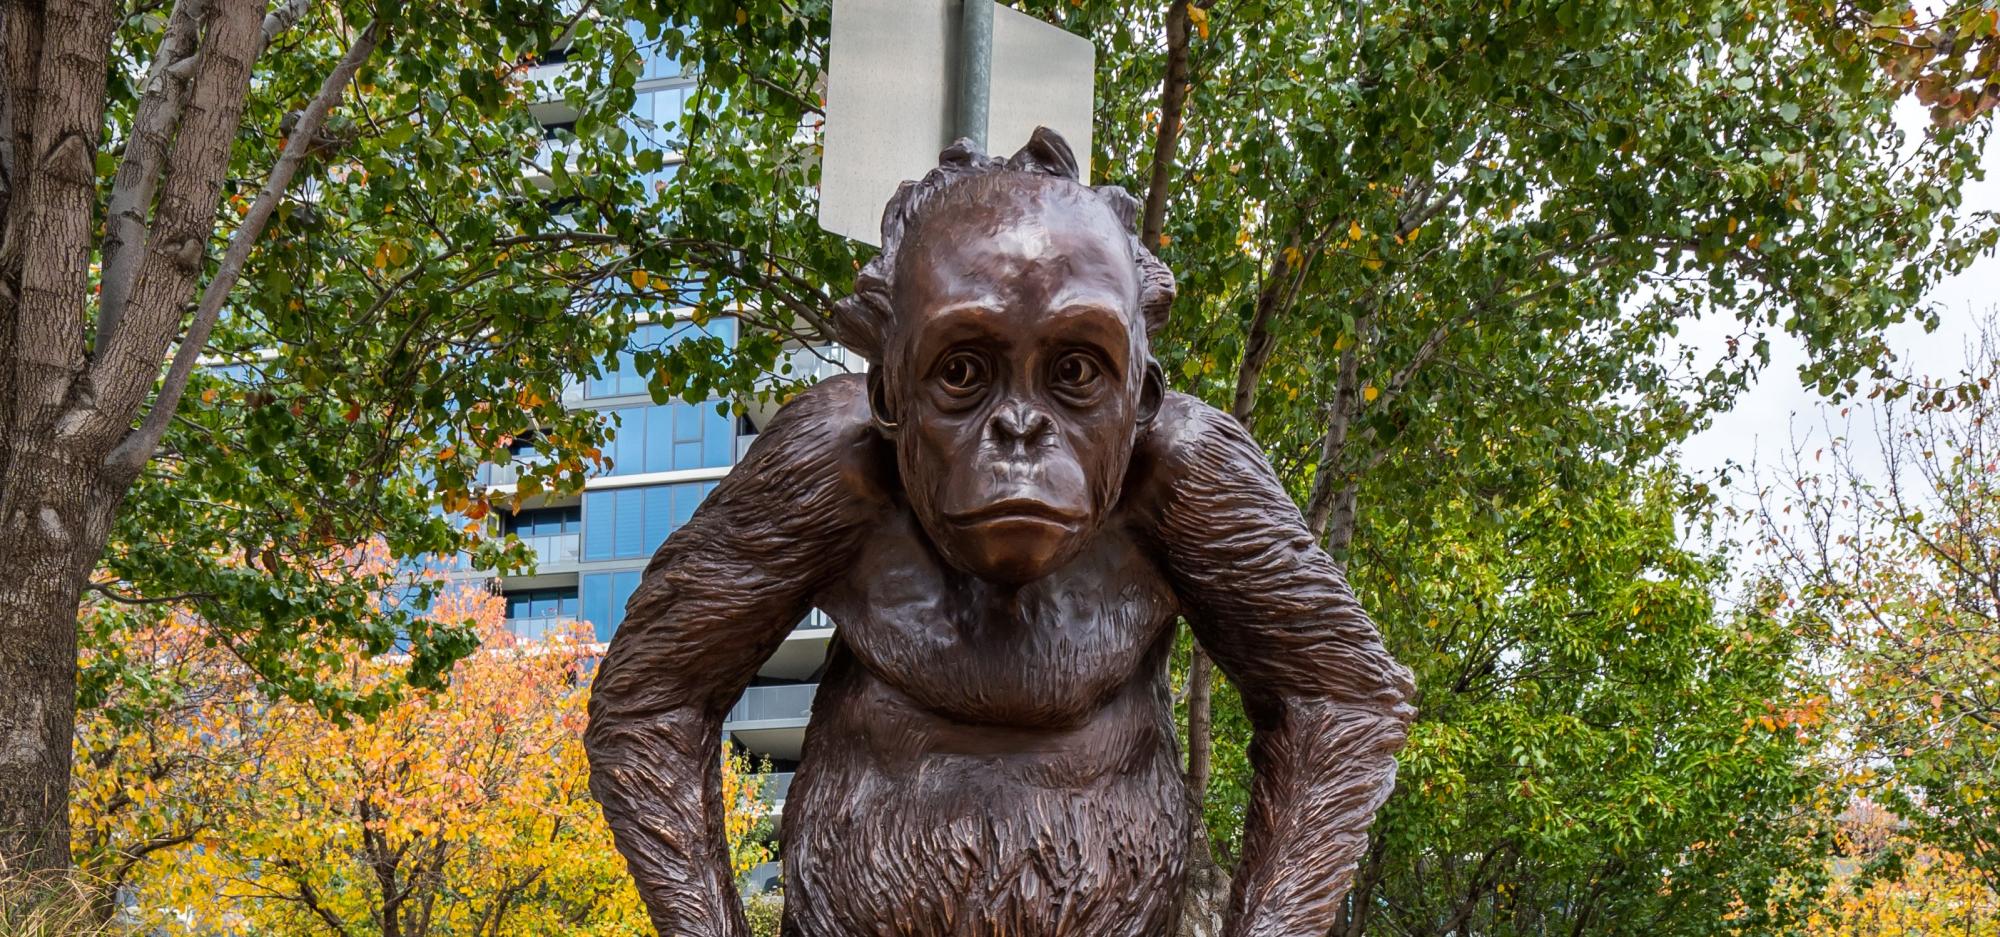 Statue of wild baby orangutan 